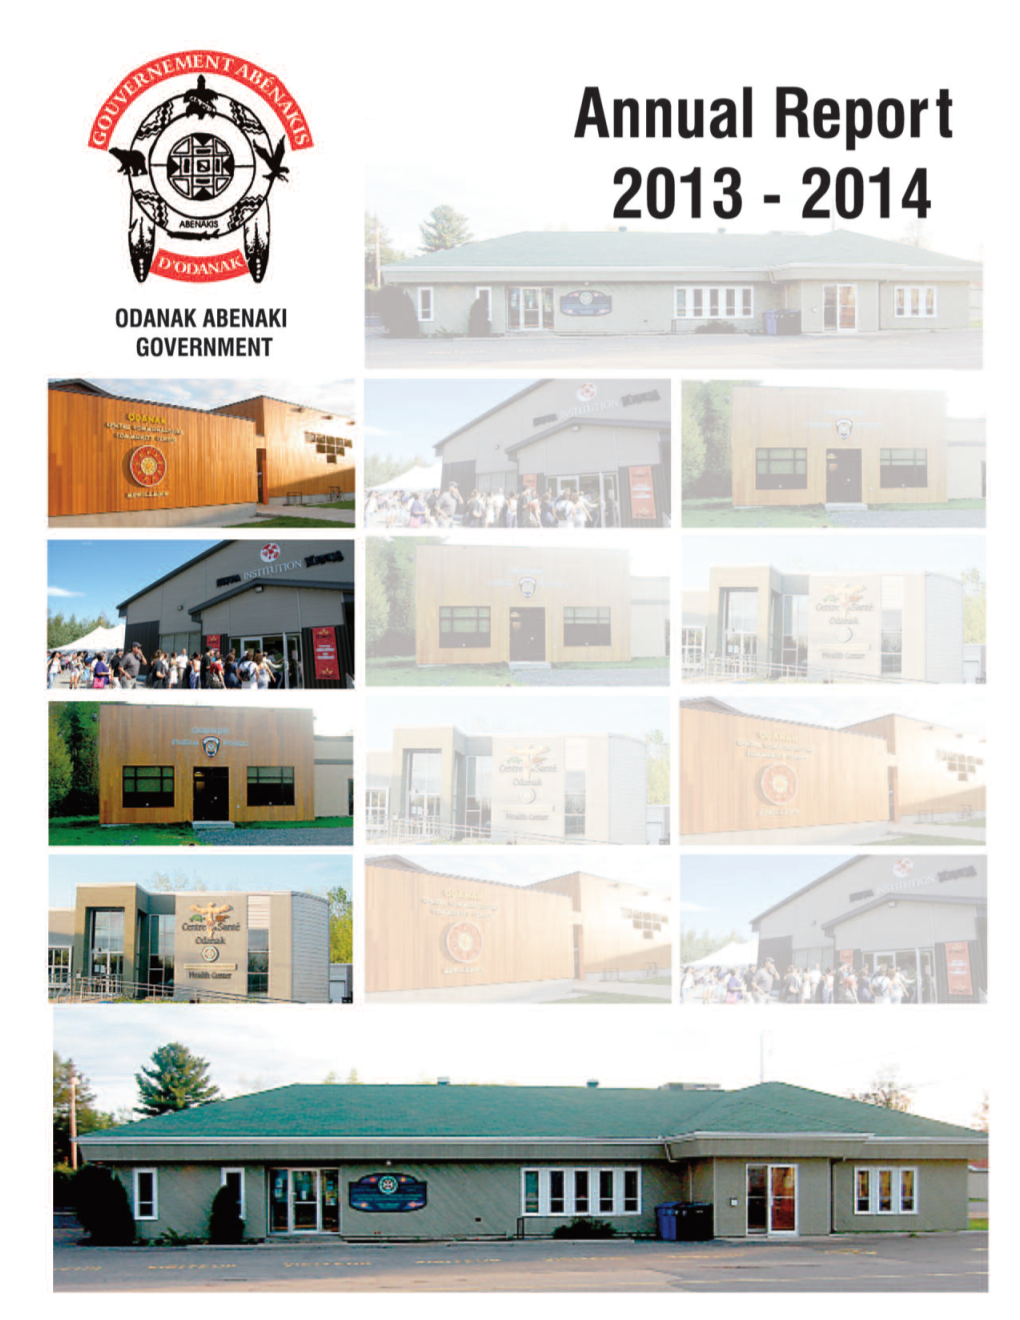 Annual Report, 2013-2014